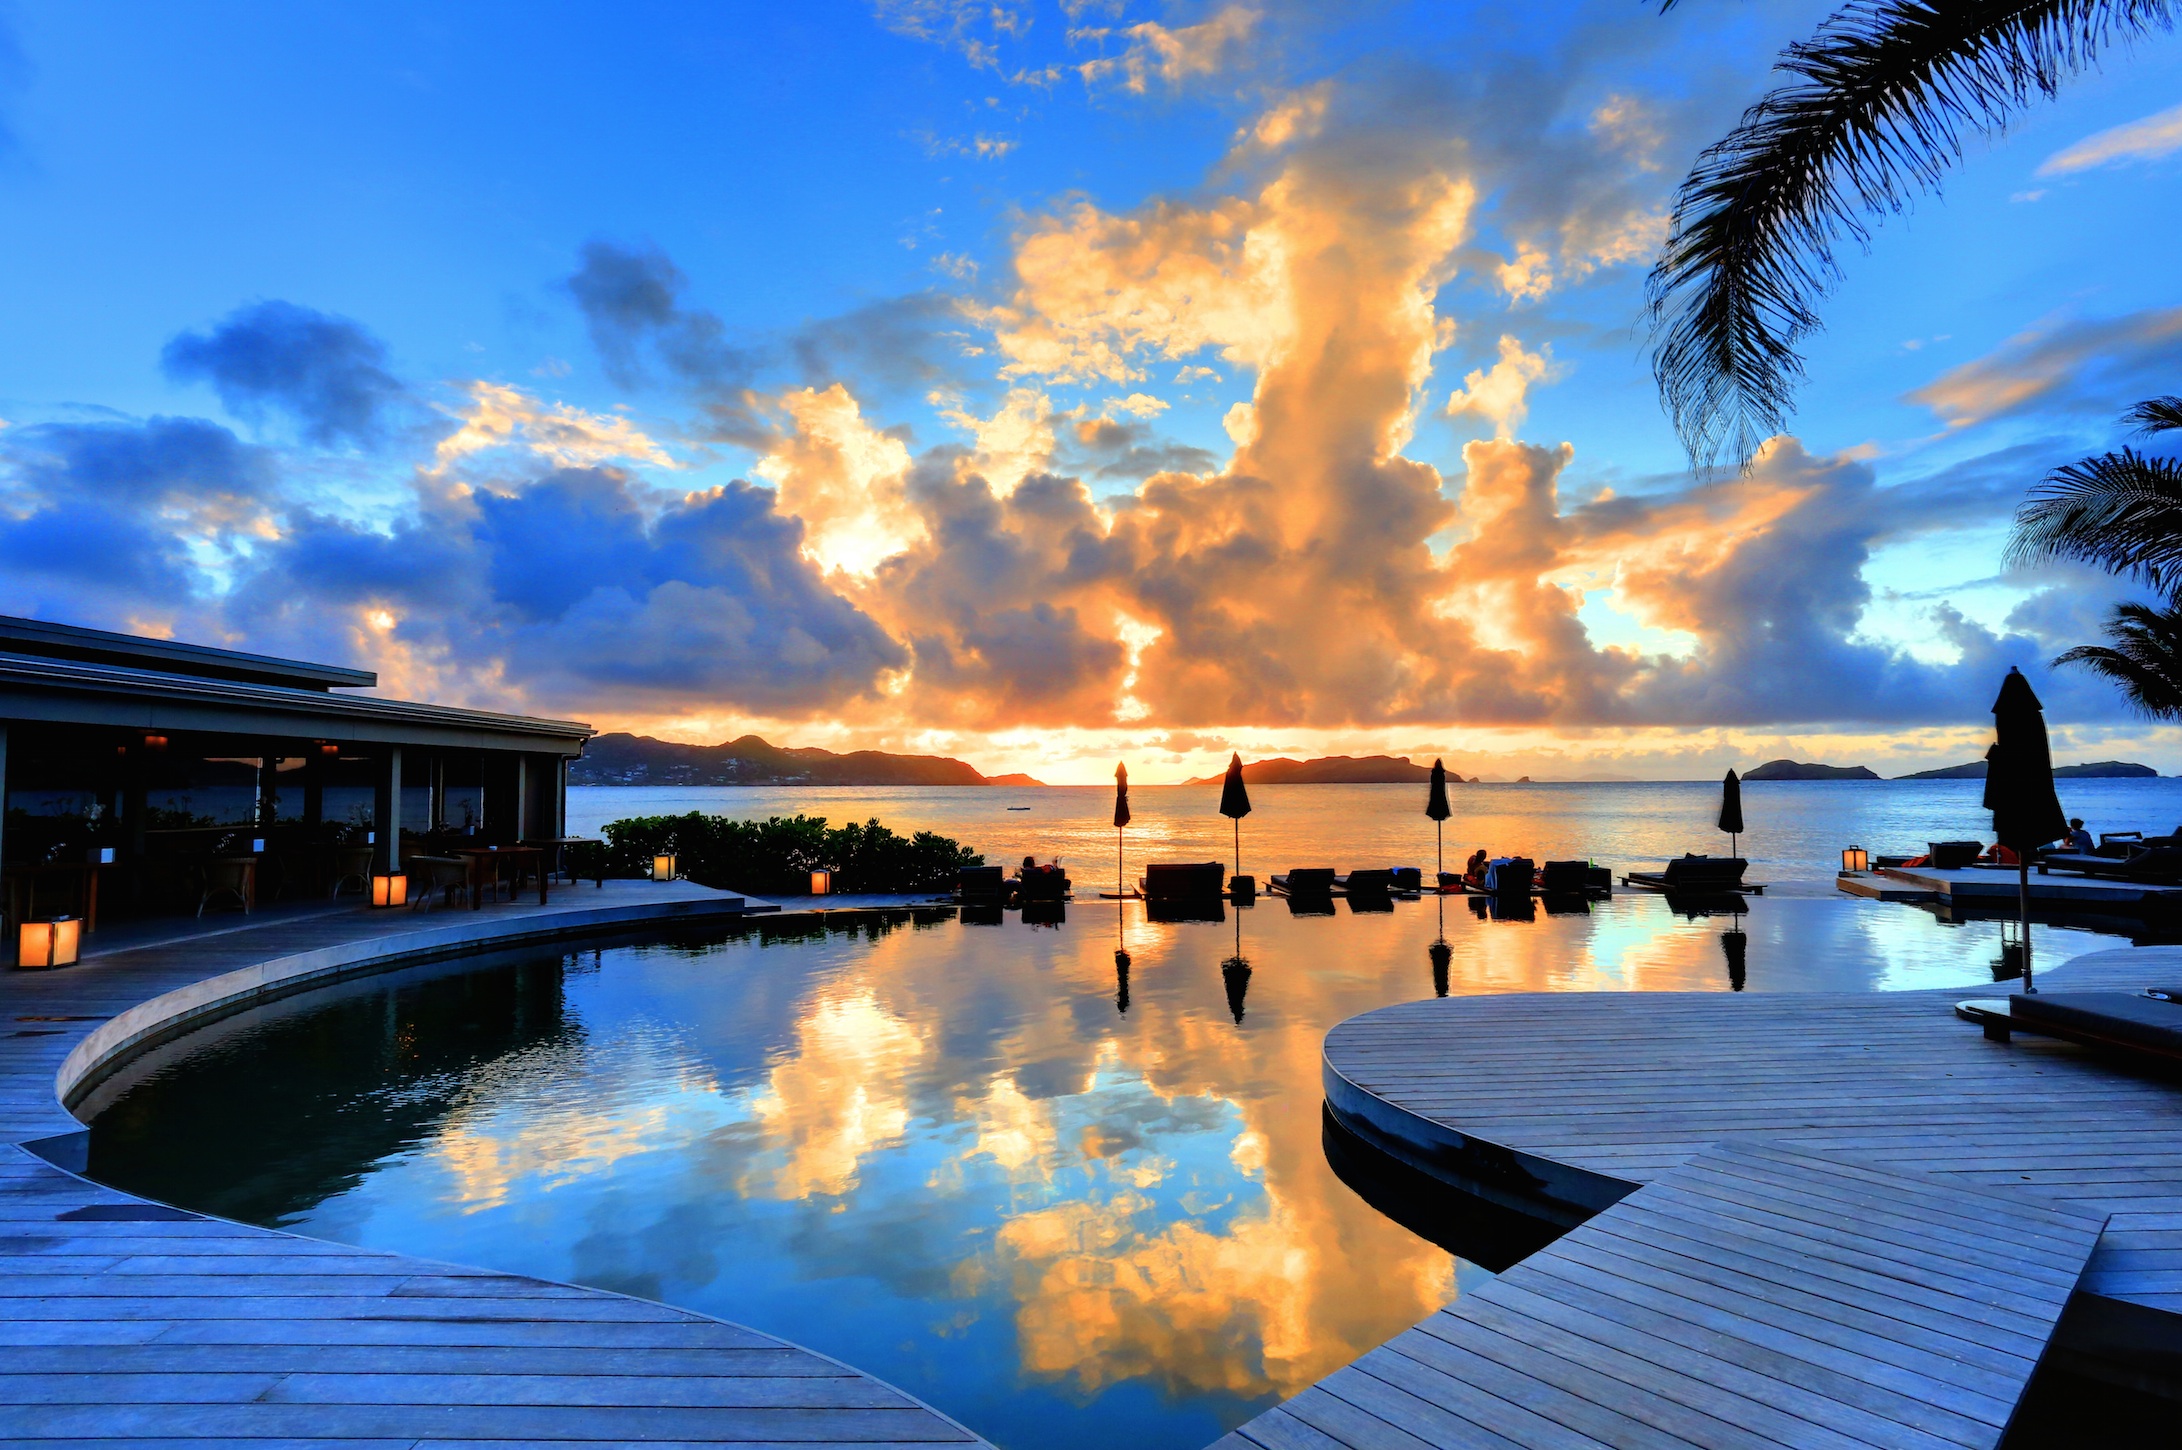 Hotel Ocean Pool Resort Saint Barthelemy Sea Tropical 2182x1450